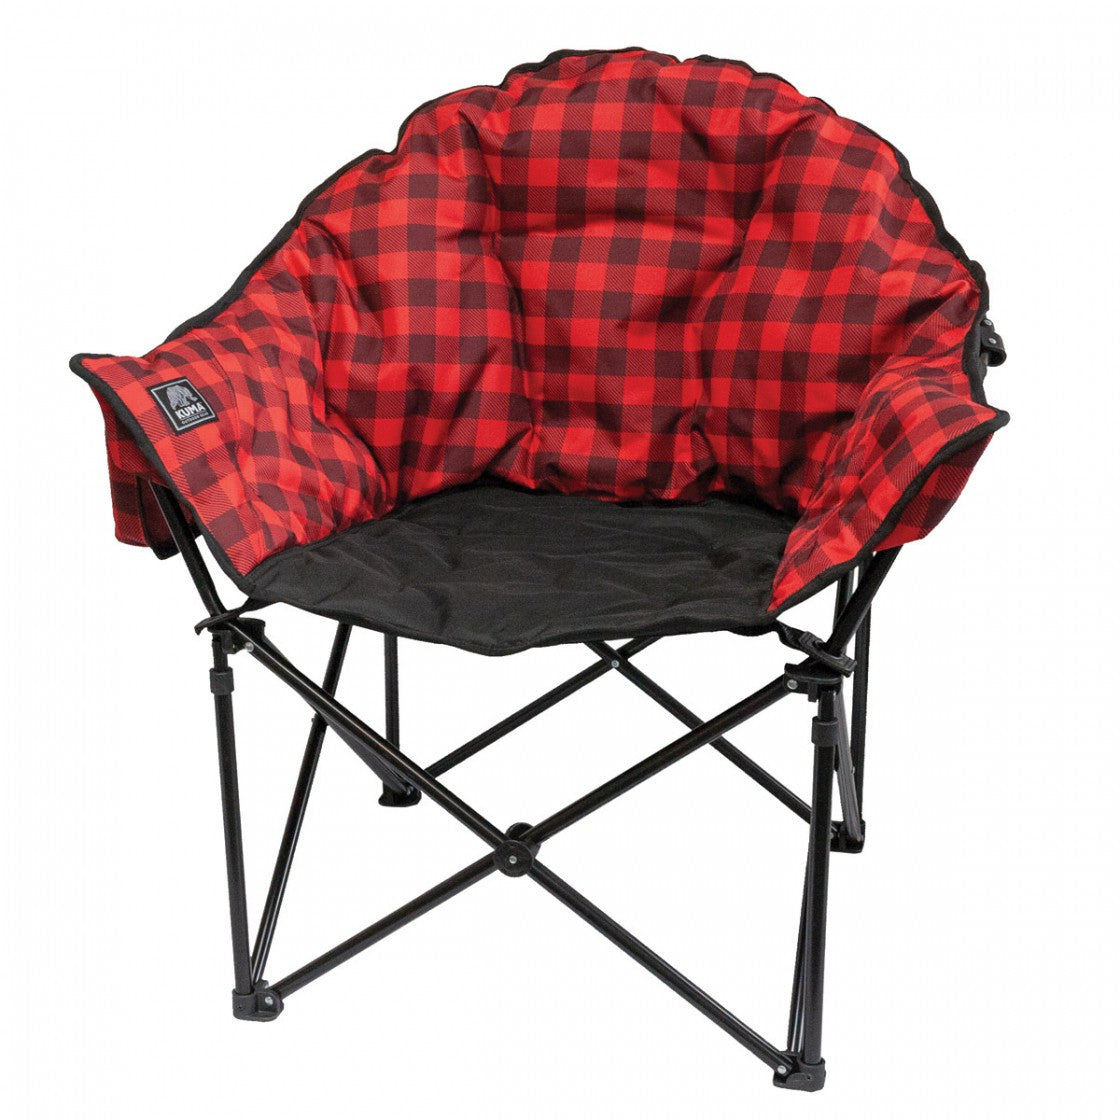 Kuma Lazy Bear Chair Red/black Plaid